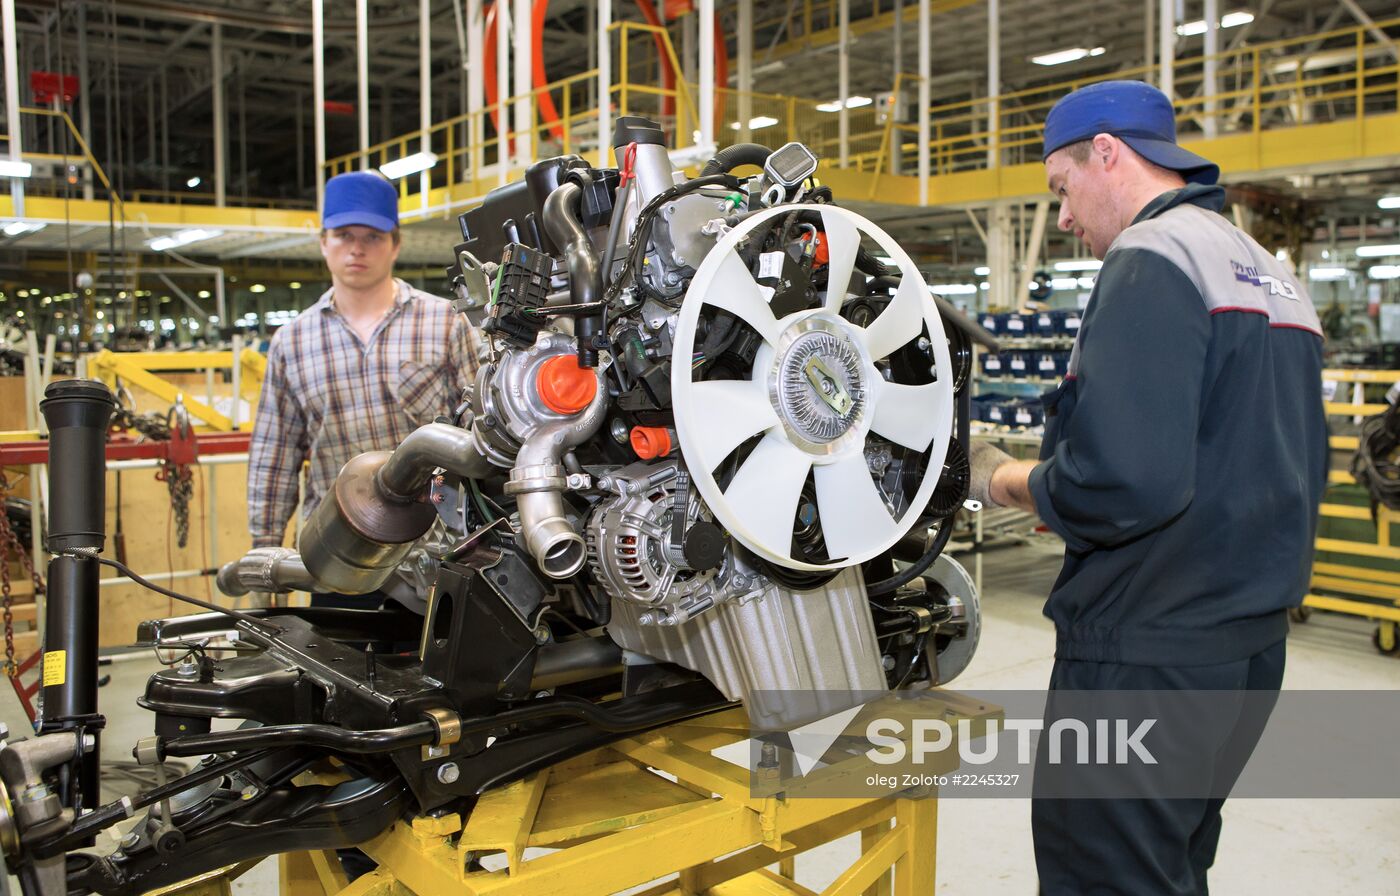 Production of Mercedes-Benz Sprinter Classic vans starts